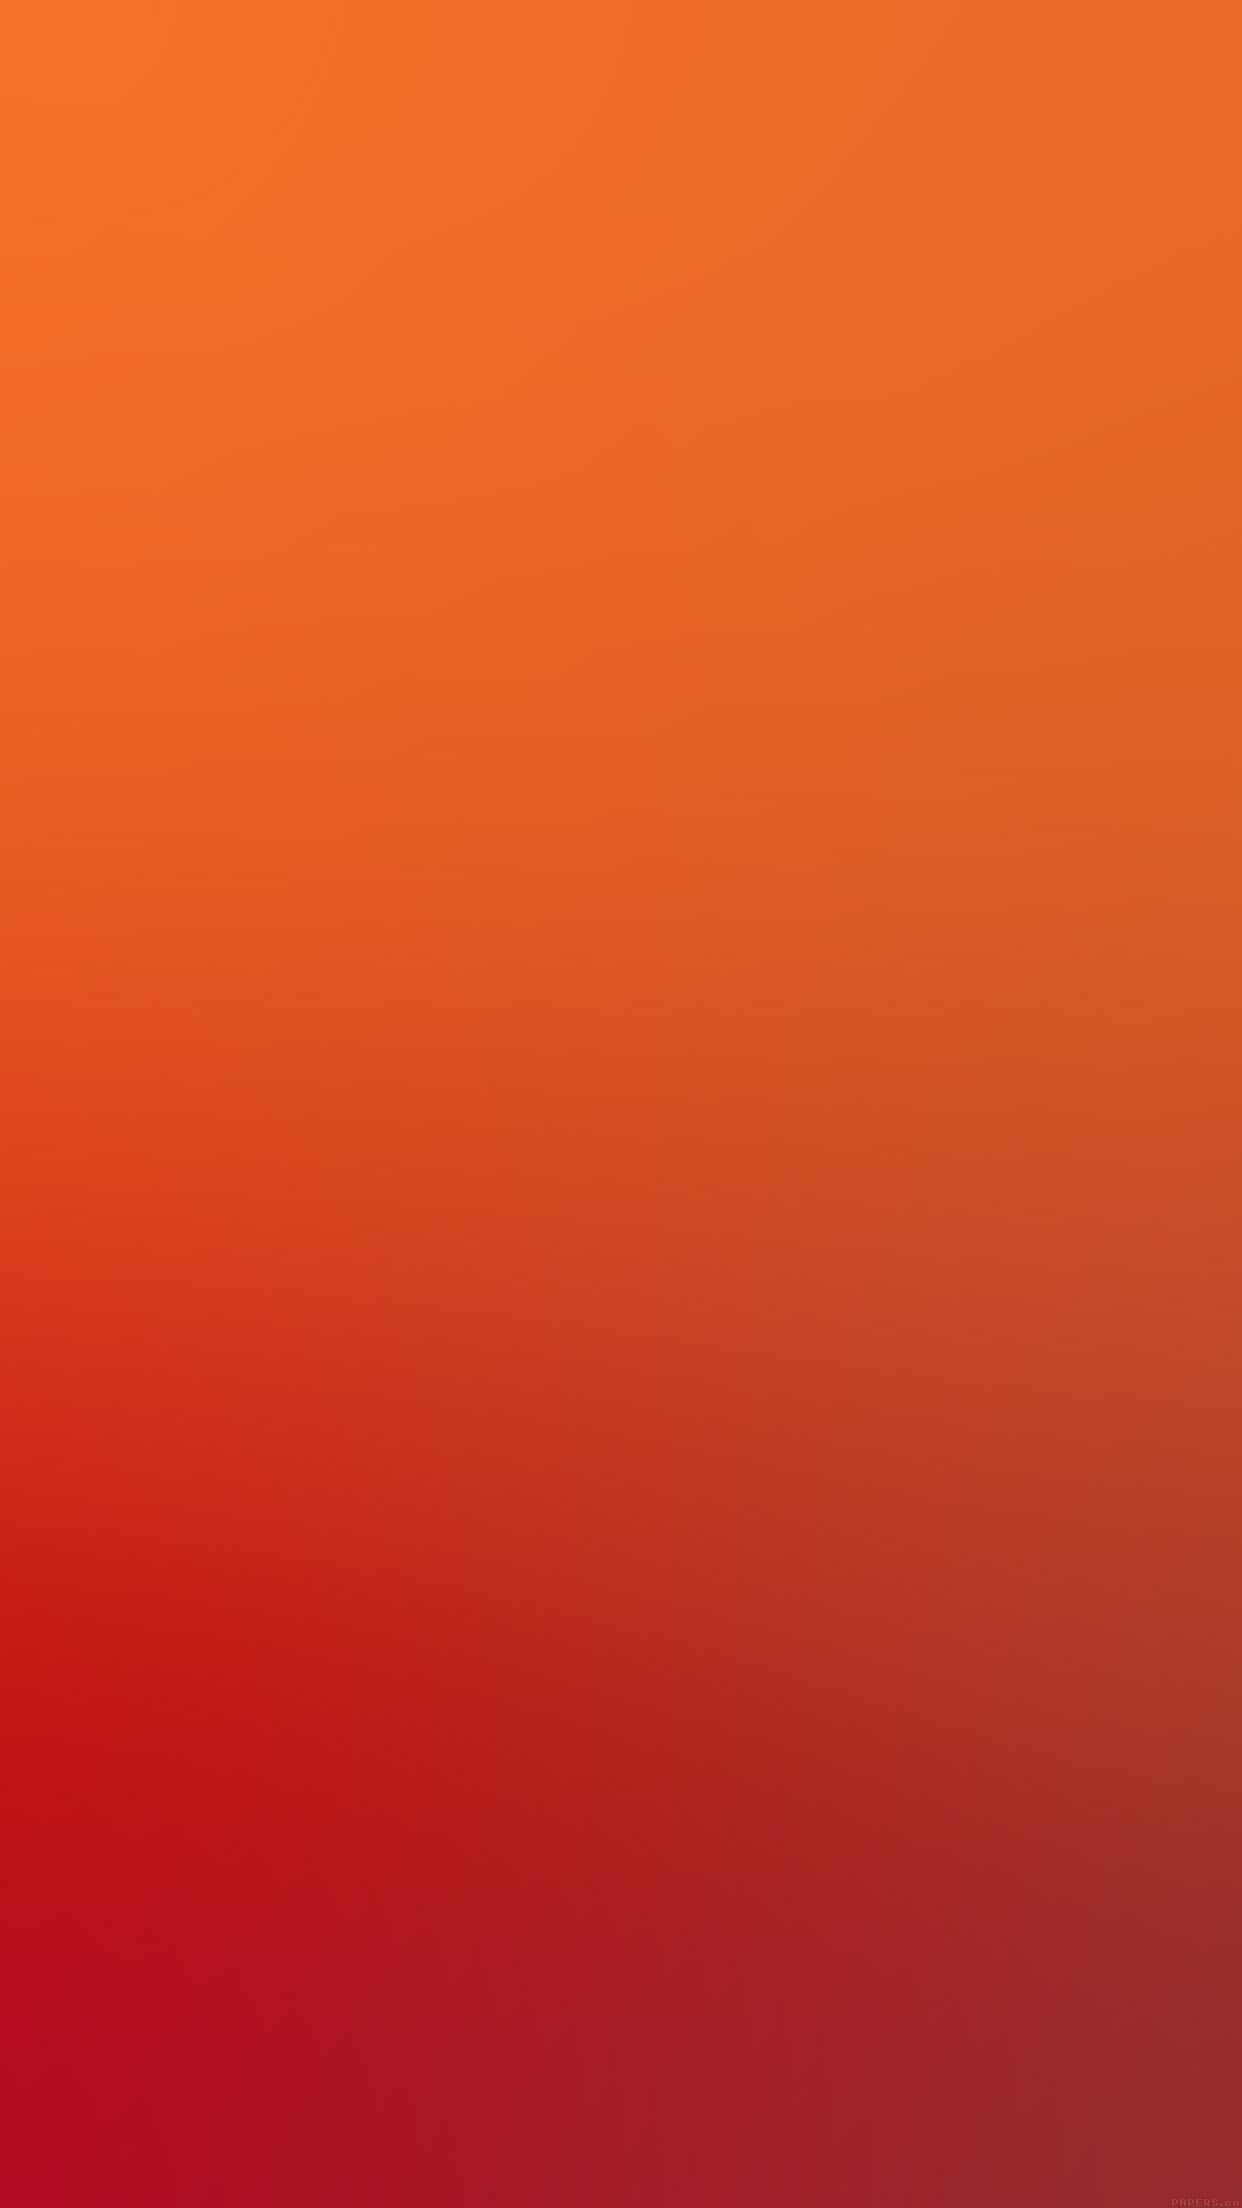 PAPERSco  Android wallpaper  mv67nightnatureflowersunsetdarkshadow orangeflare